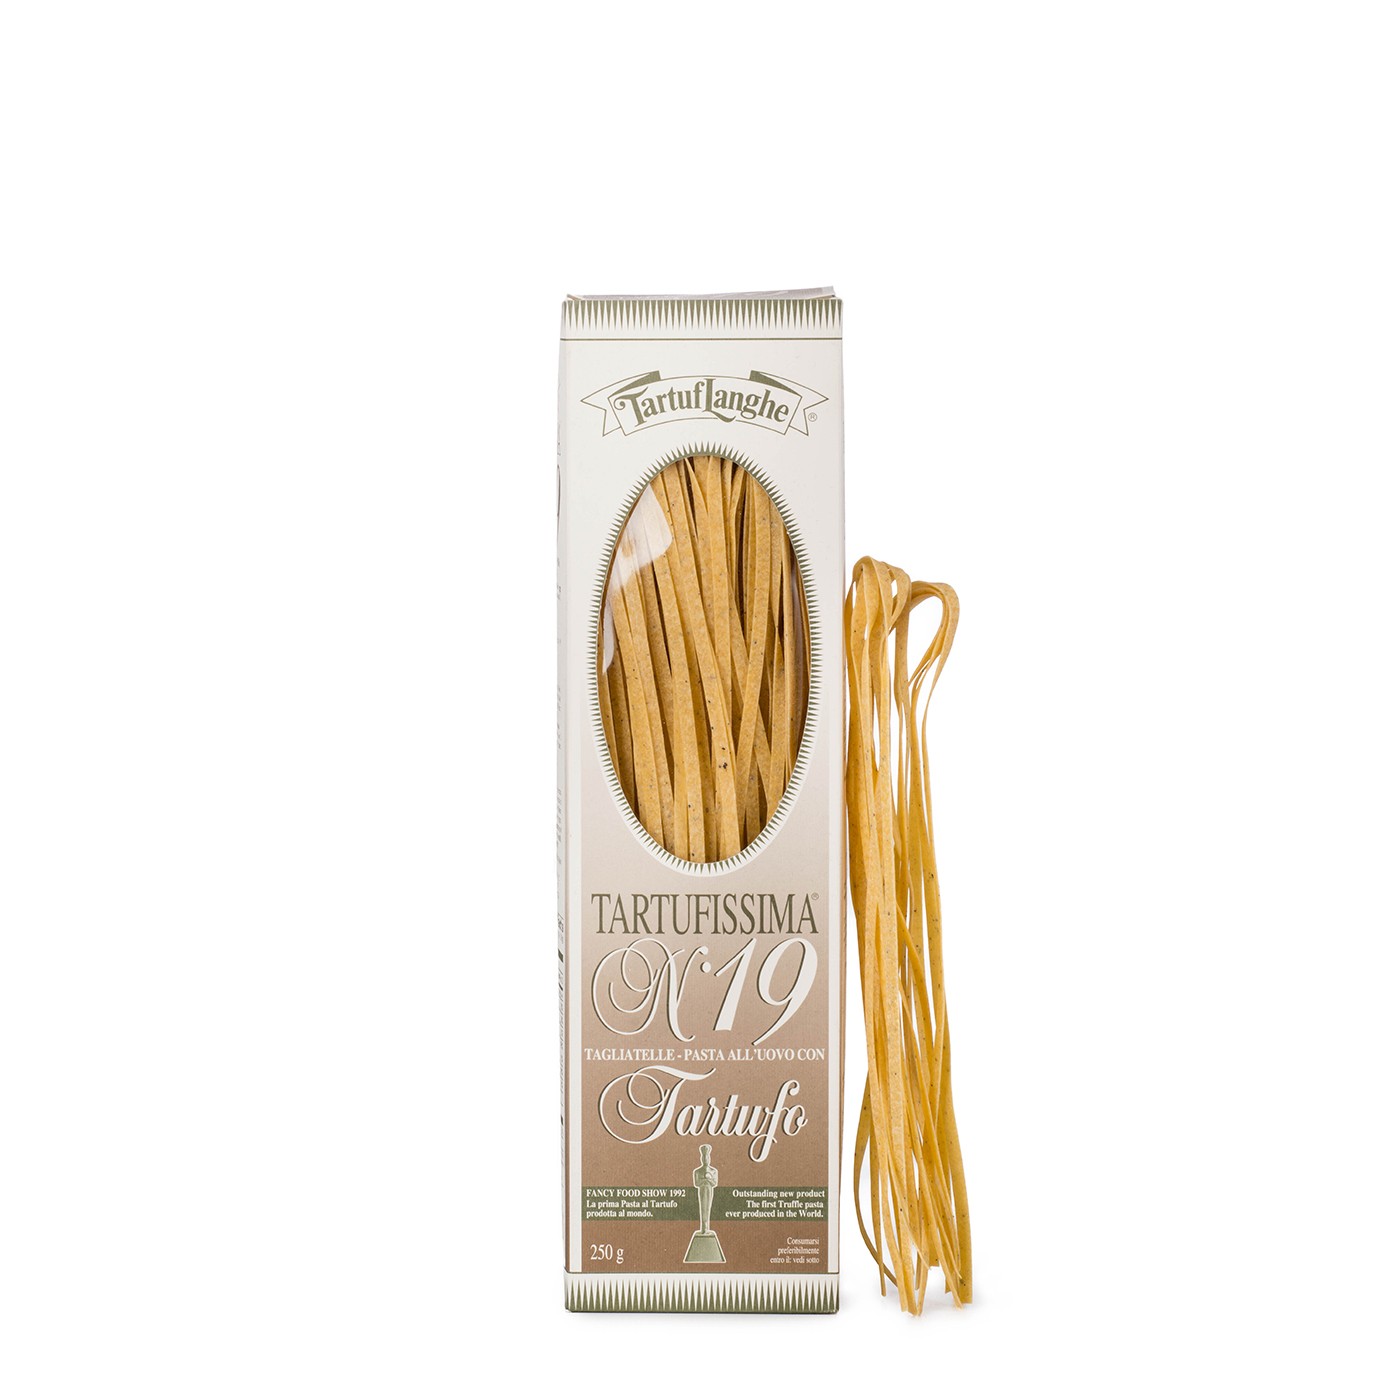 Tartufissima #19 Tagliatelle Pasta with Truffles 8.8 oz